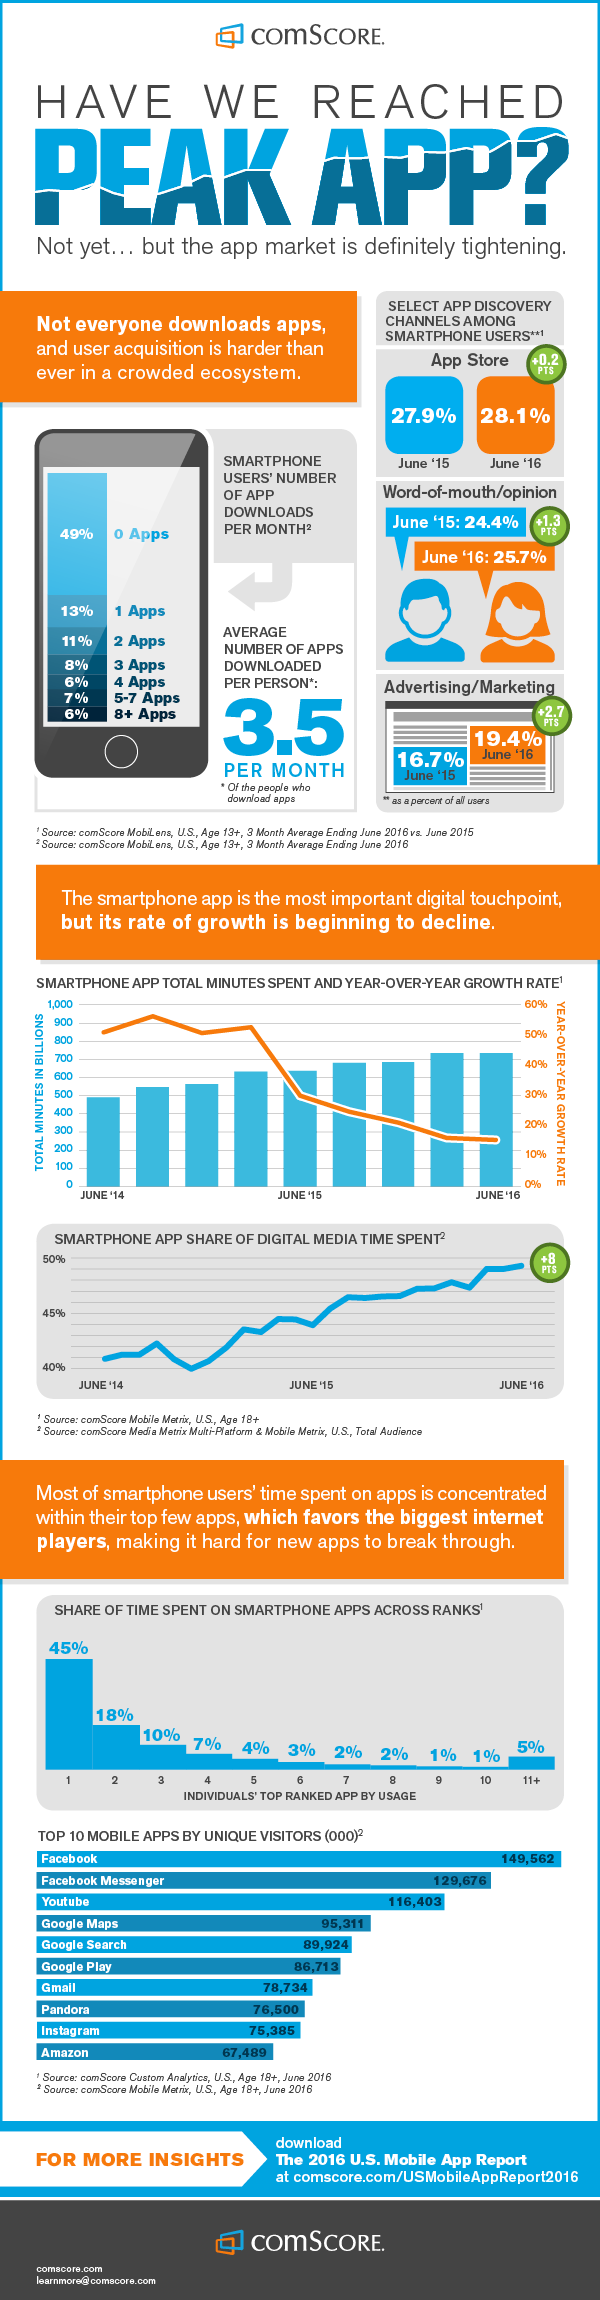 Peak App - Mobile App Report Infographic